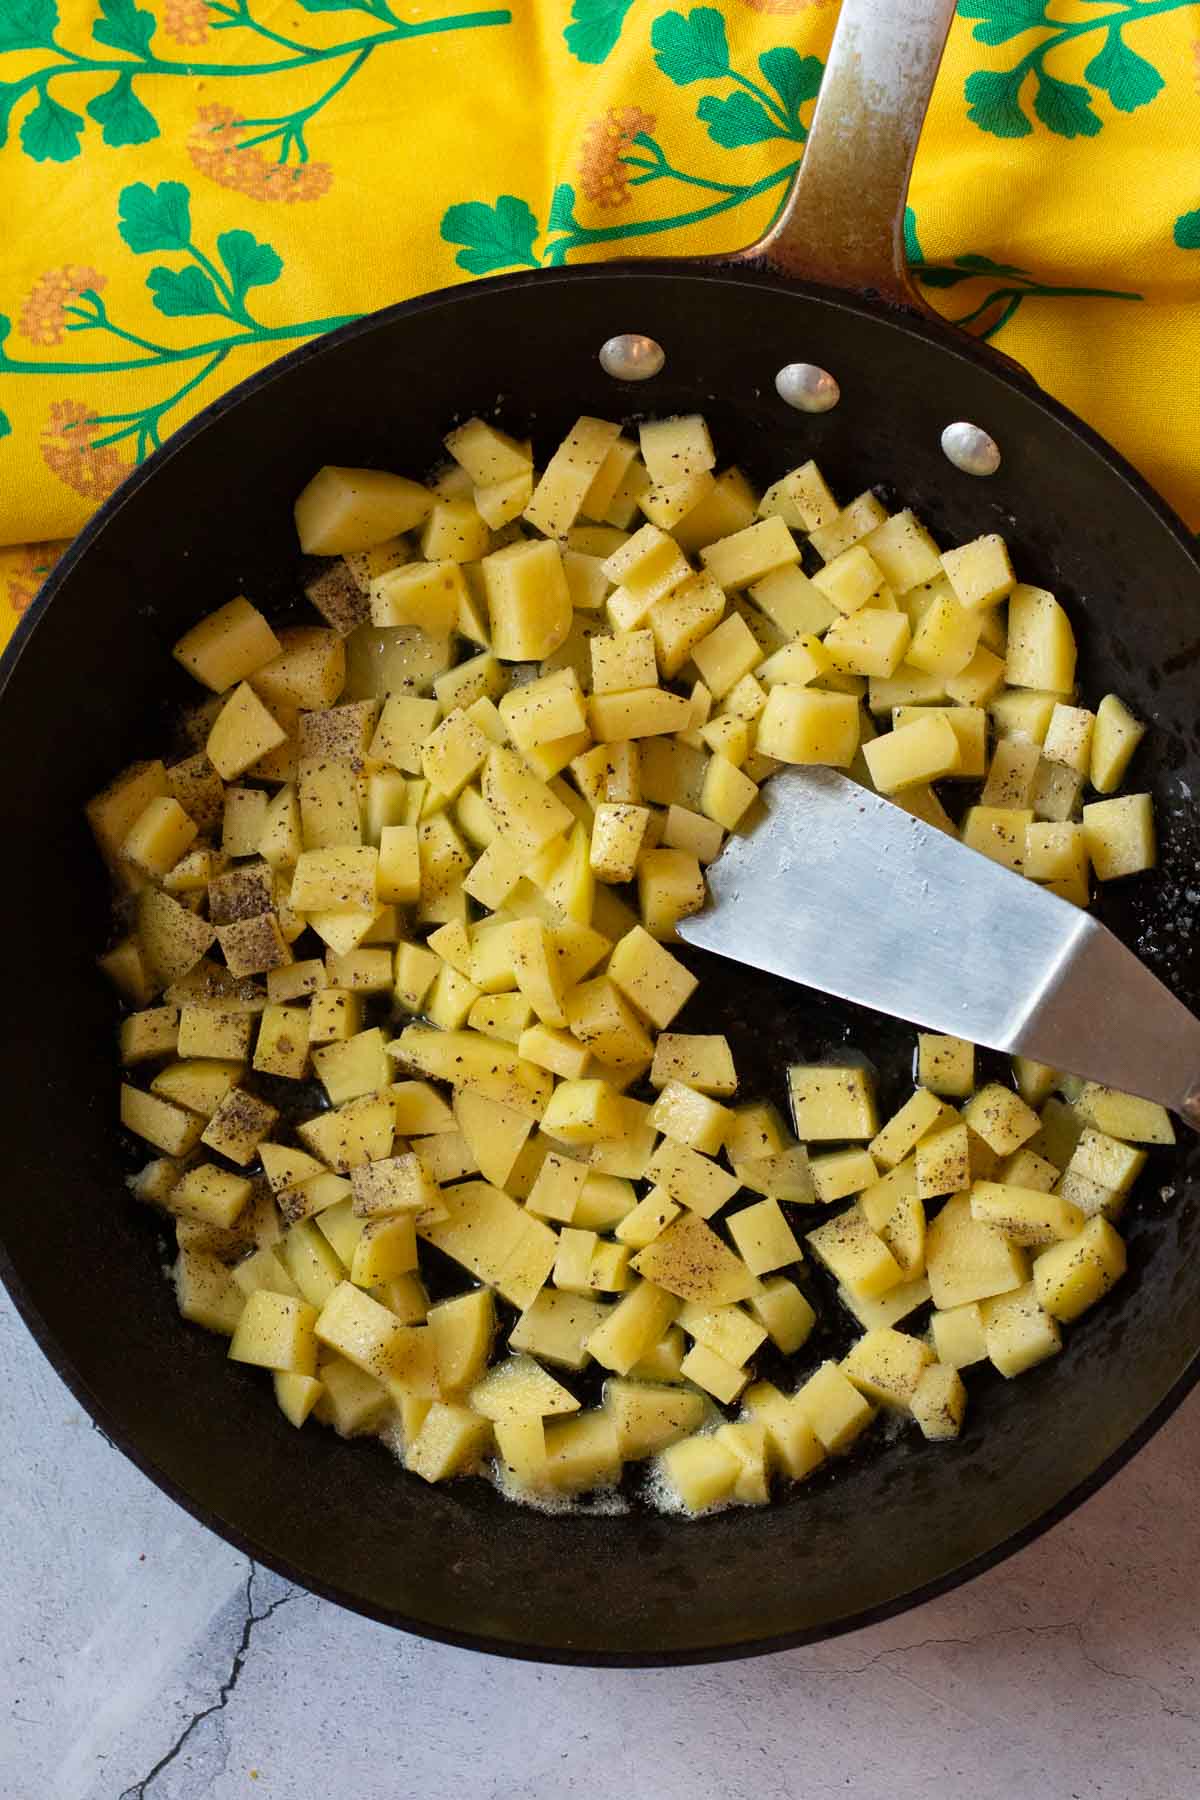 How to fry potatoes to make country potatoes.